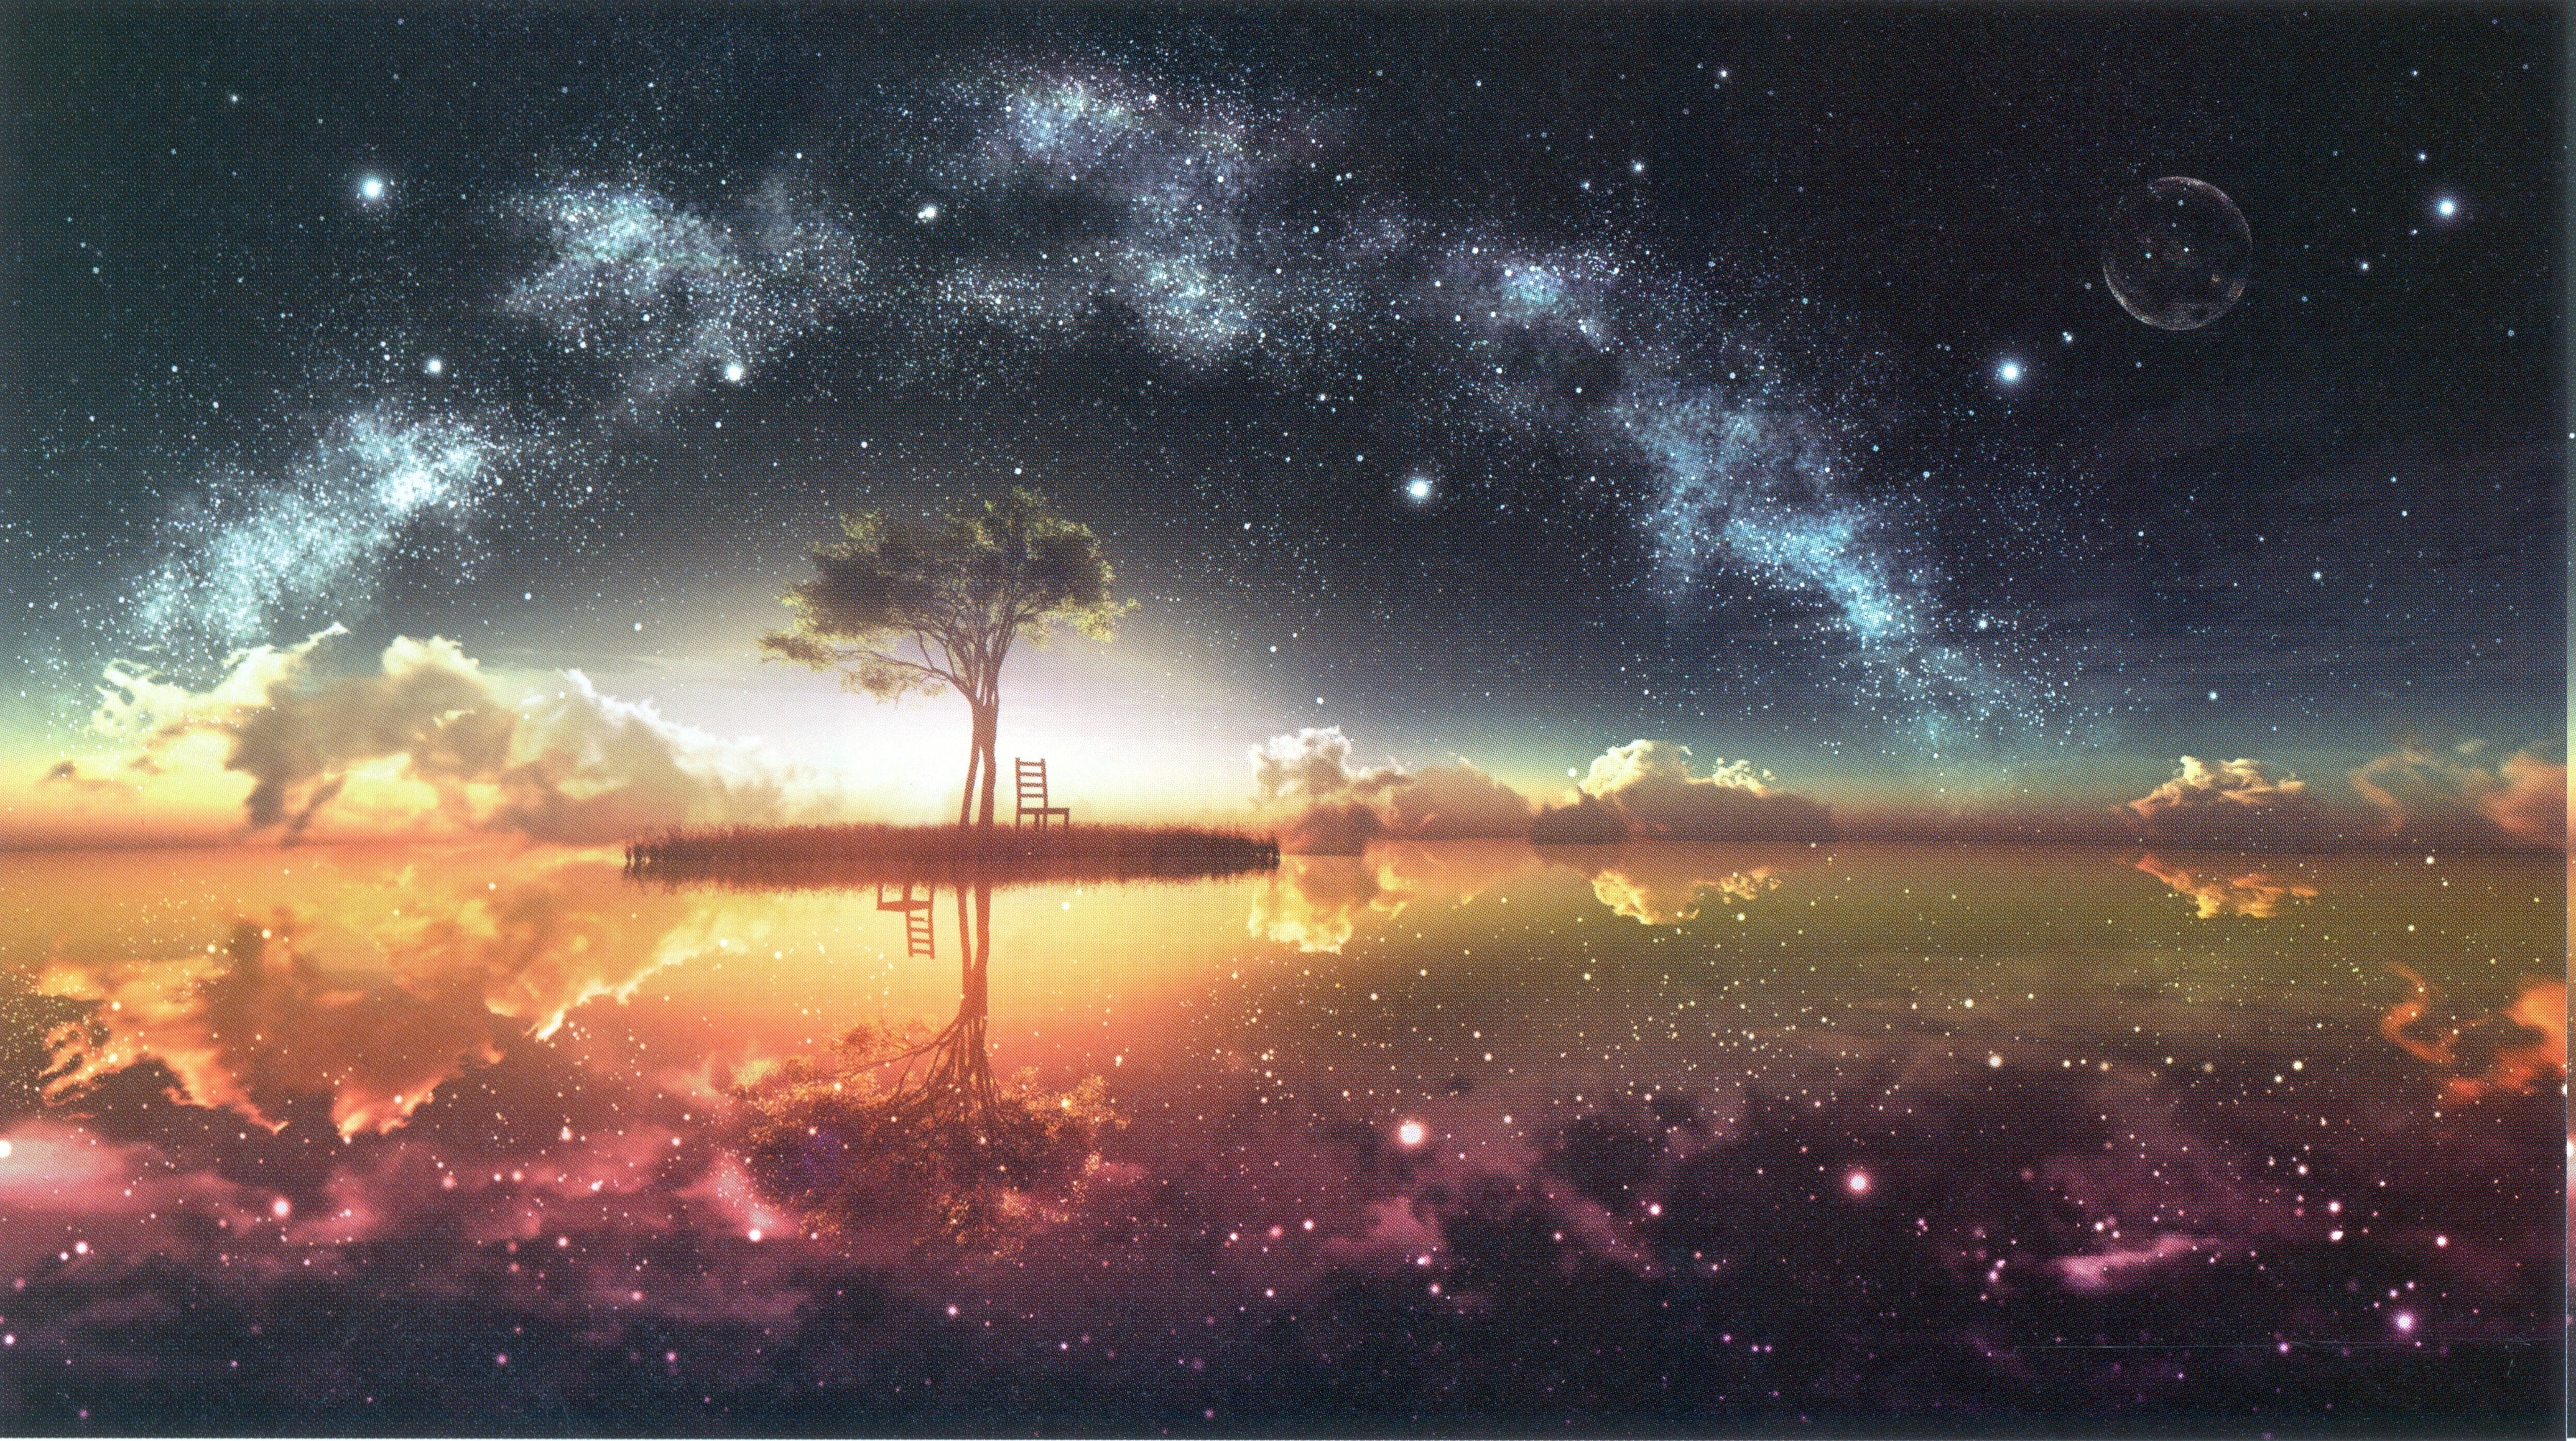 anime landscape, sky, star - space, night, astronomy, scenics - nature